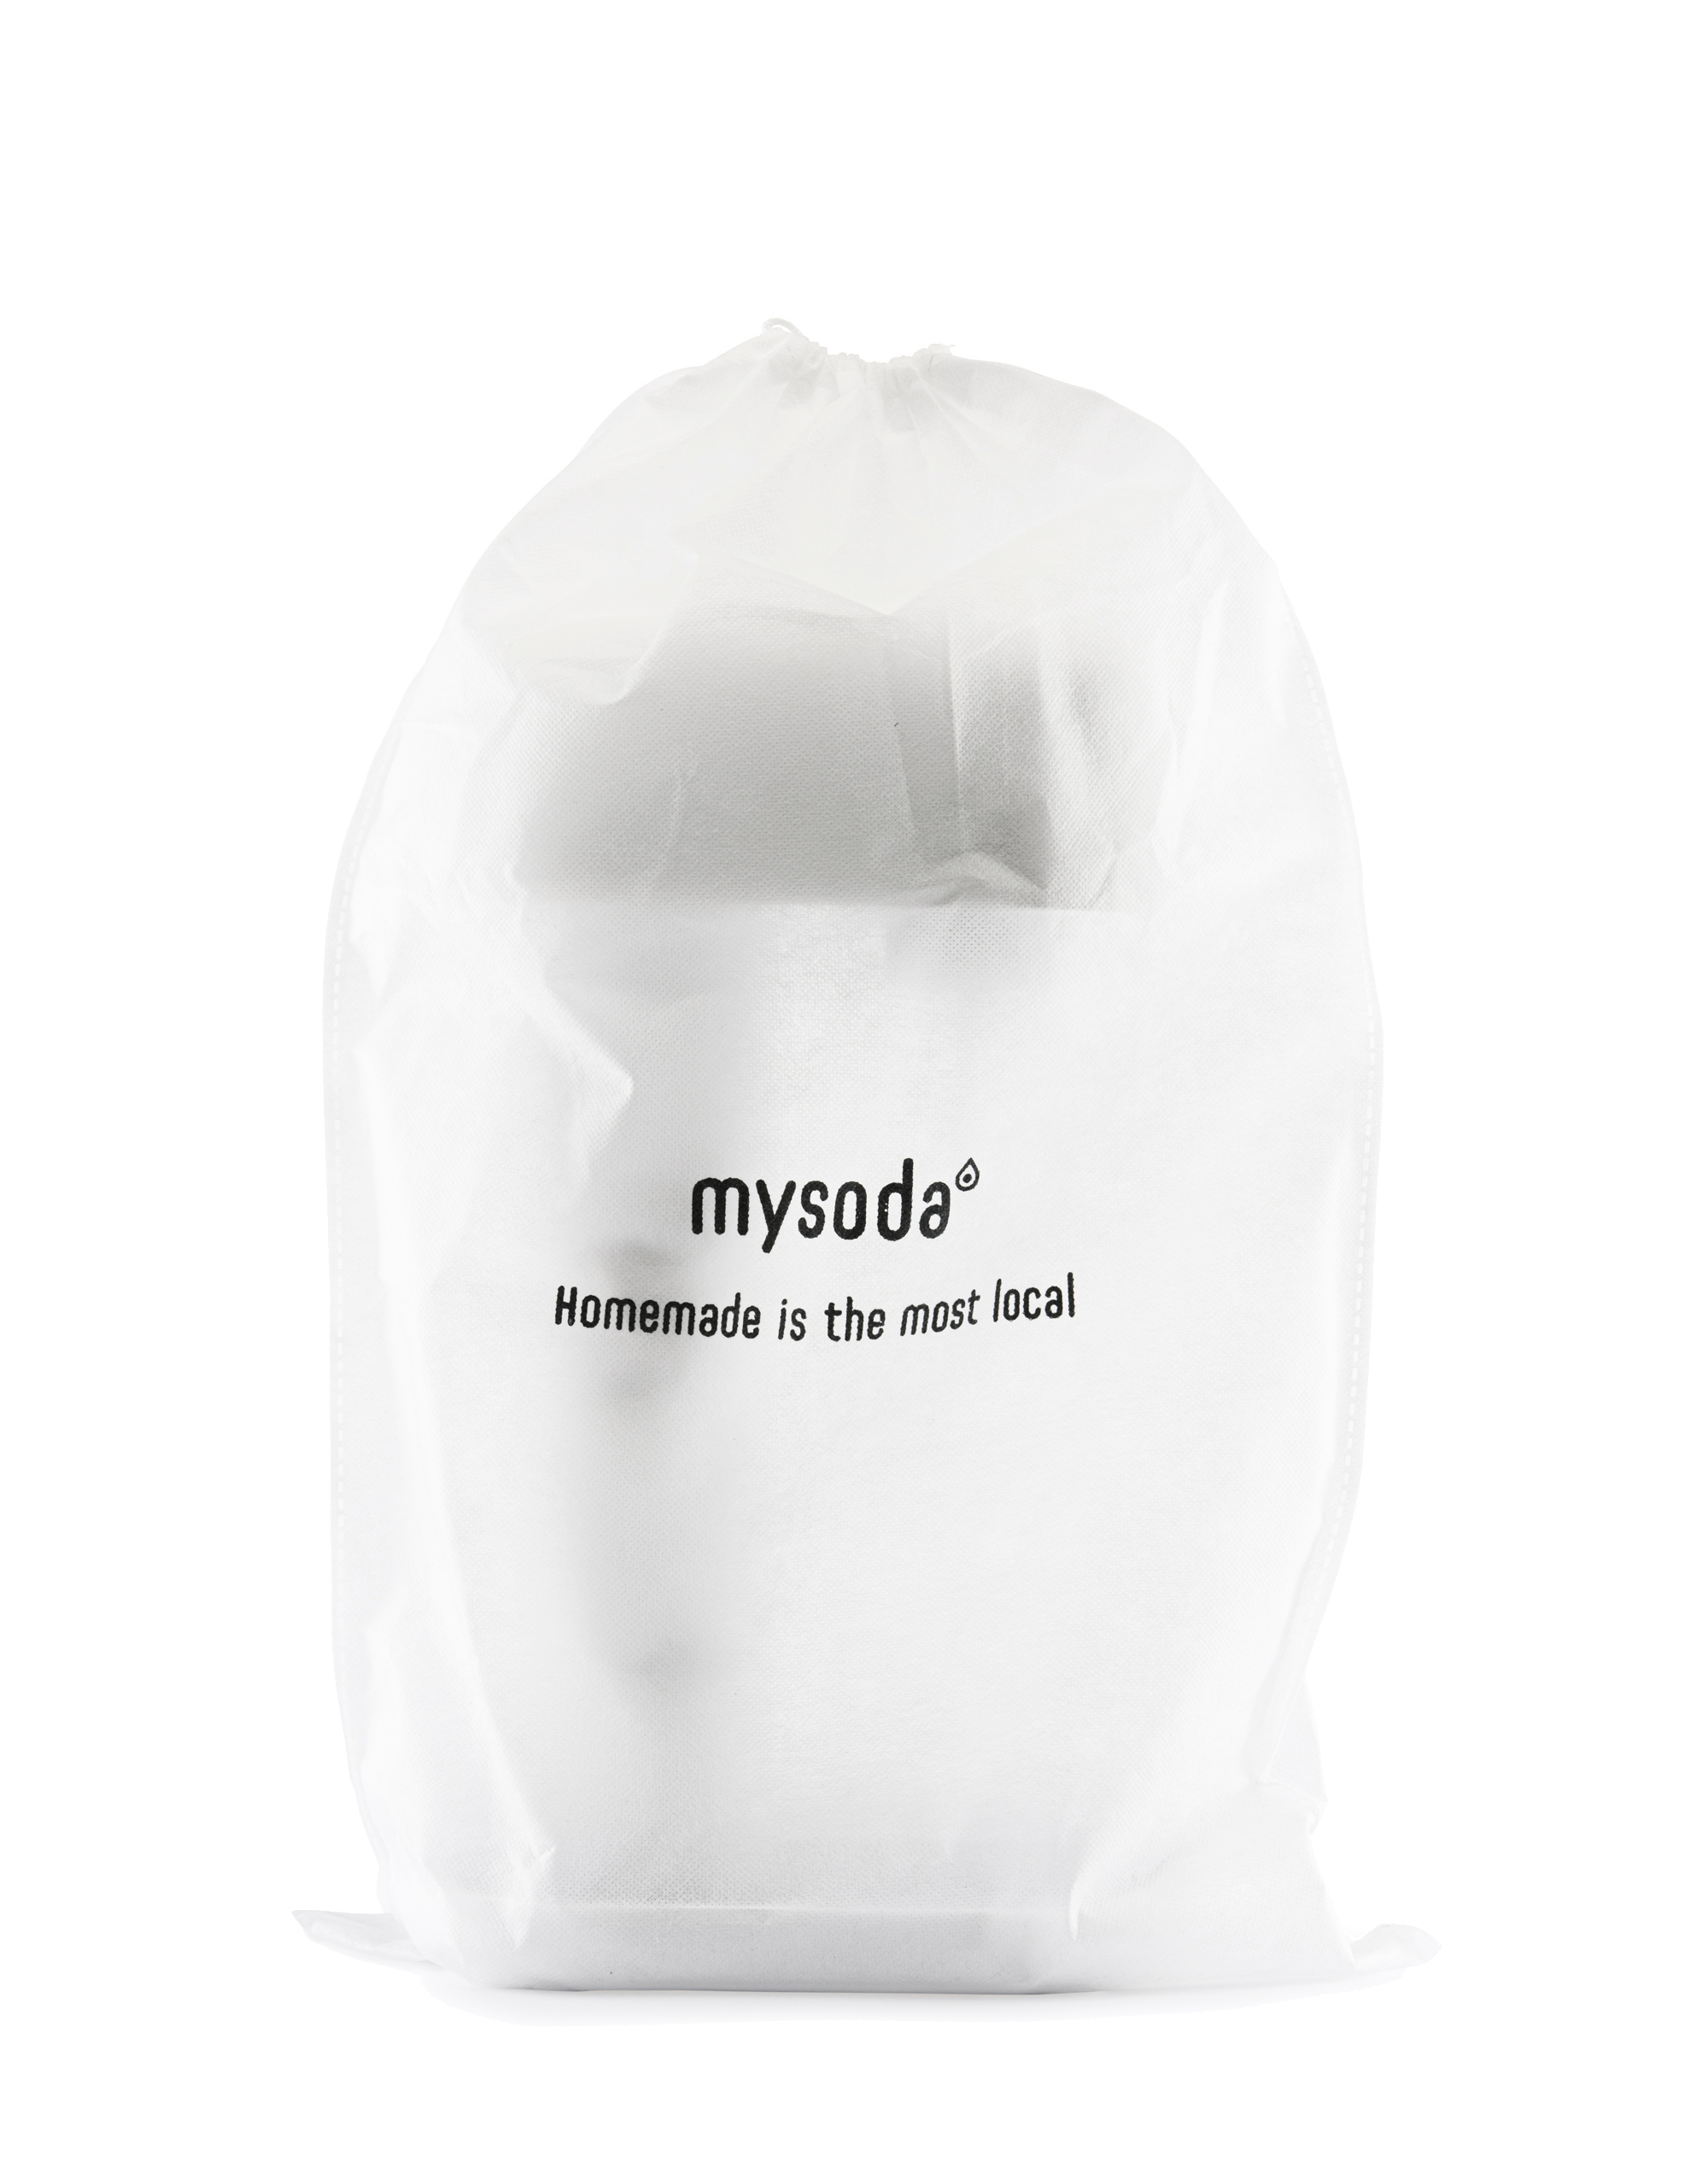 MYSODA RB003AL-W Ruby Wassersprudler Weiß